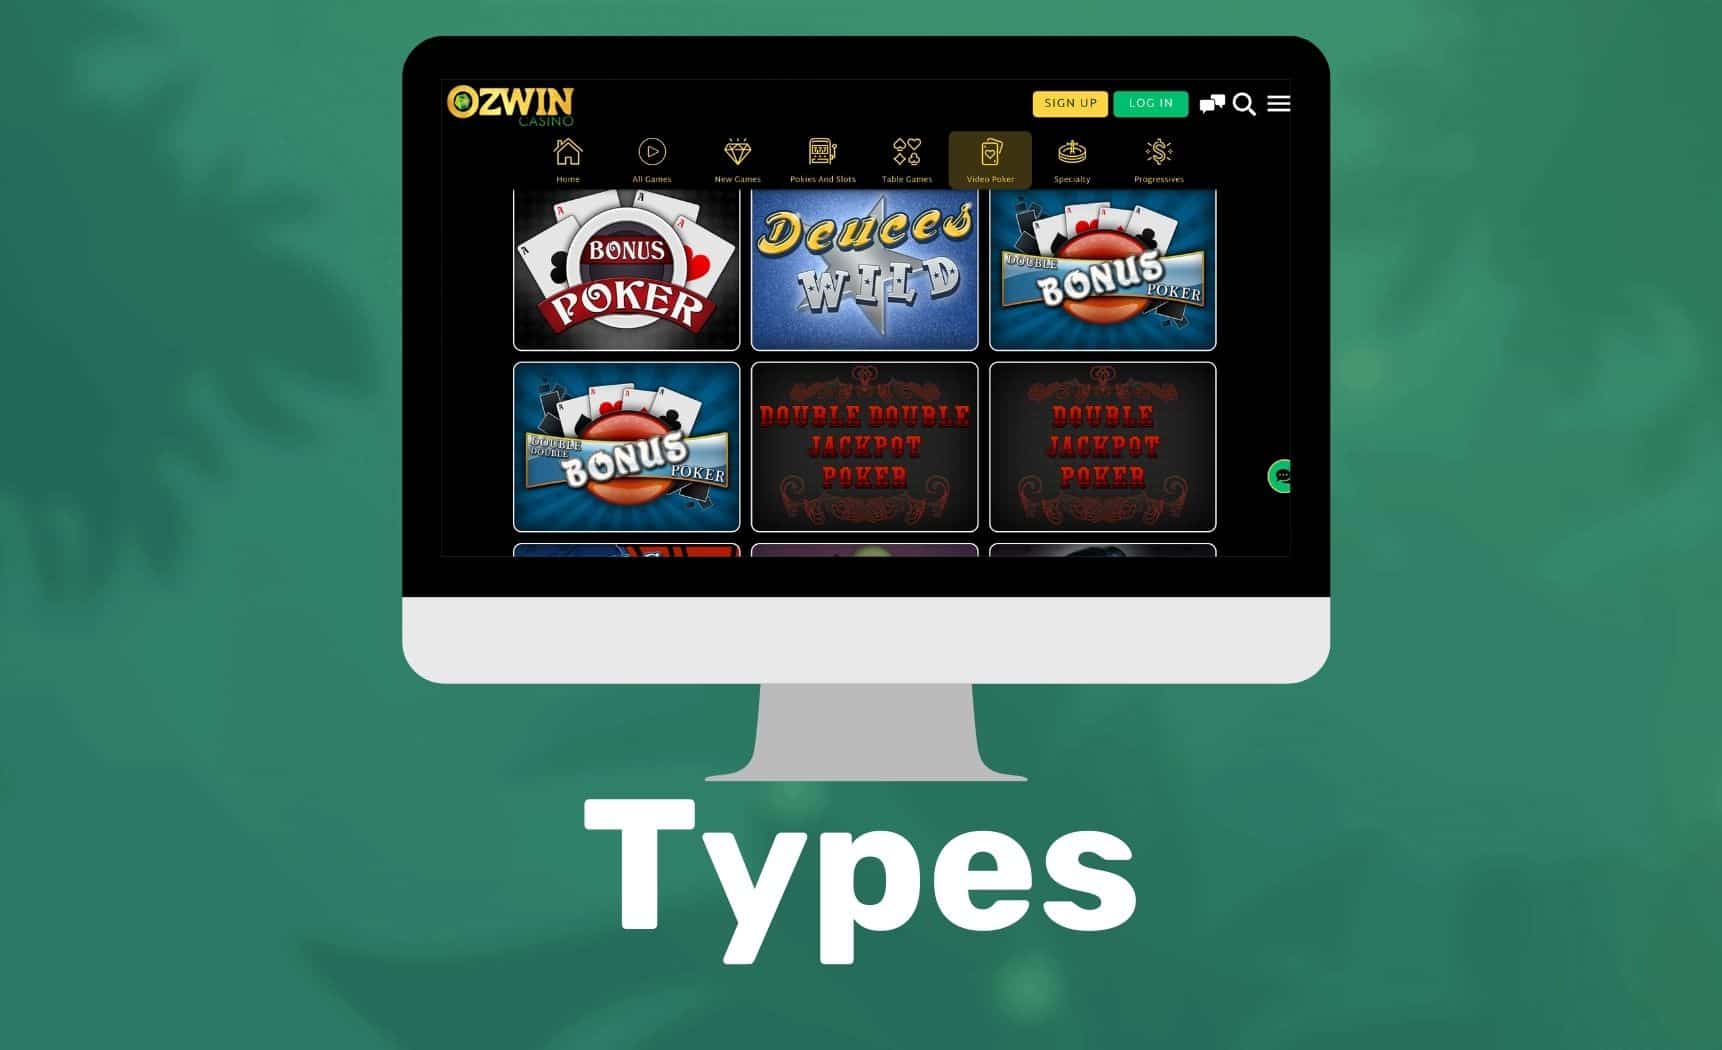 Ozwin Casino Australia types of games discussion